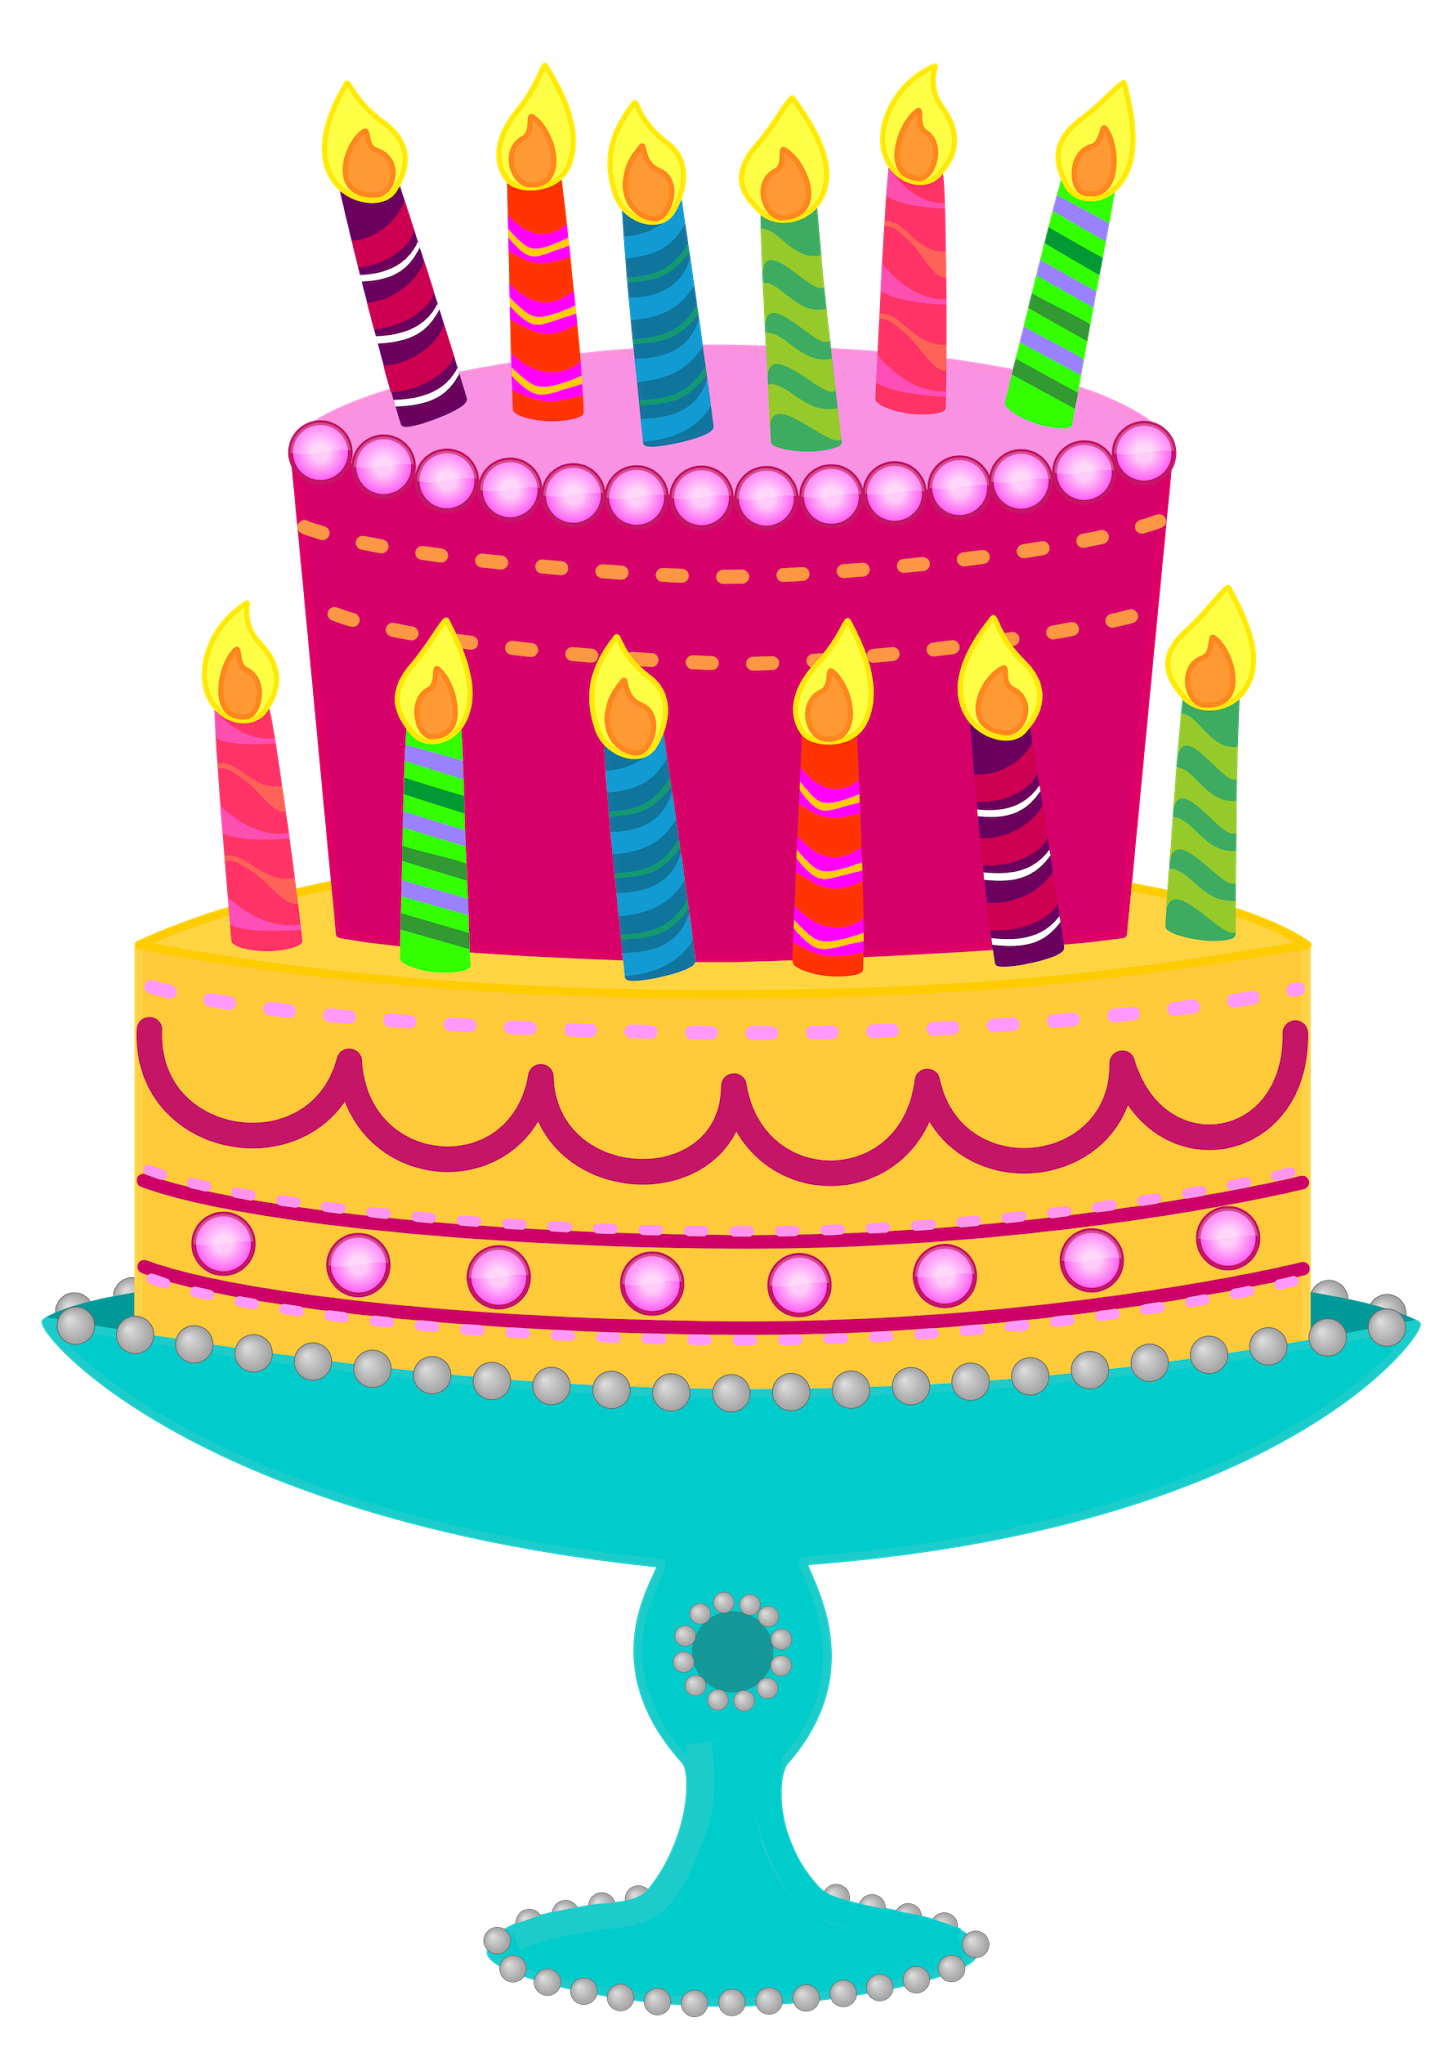 Clip art of birthday cake - C